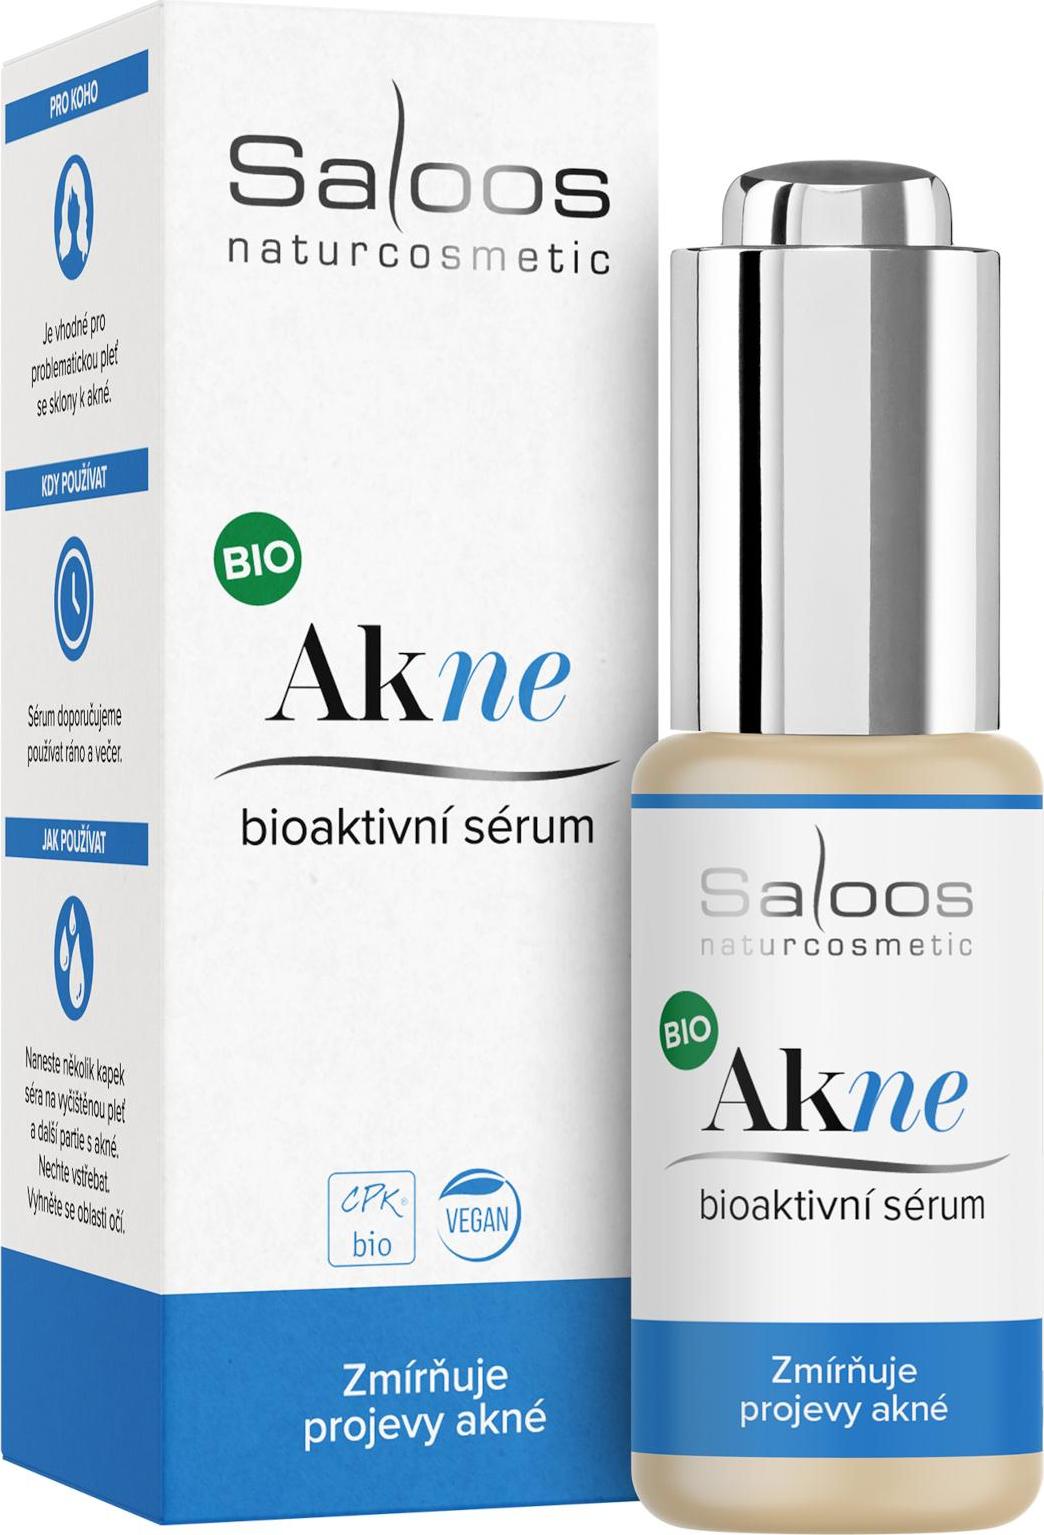 Saloos Akne bioaktivní sérum 20 ml